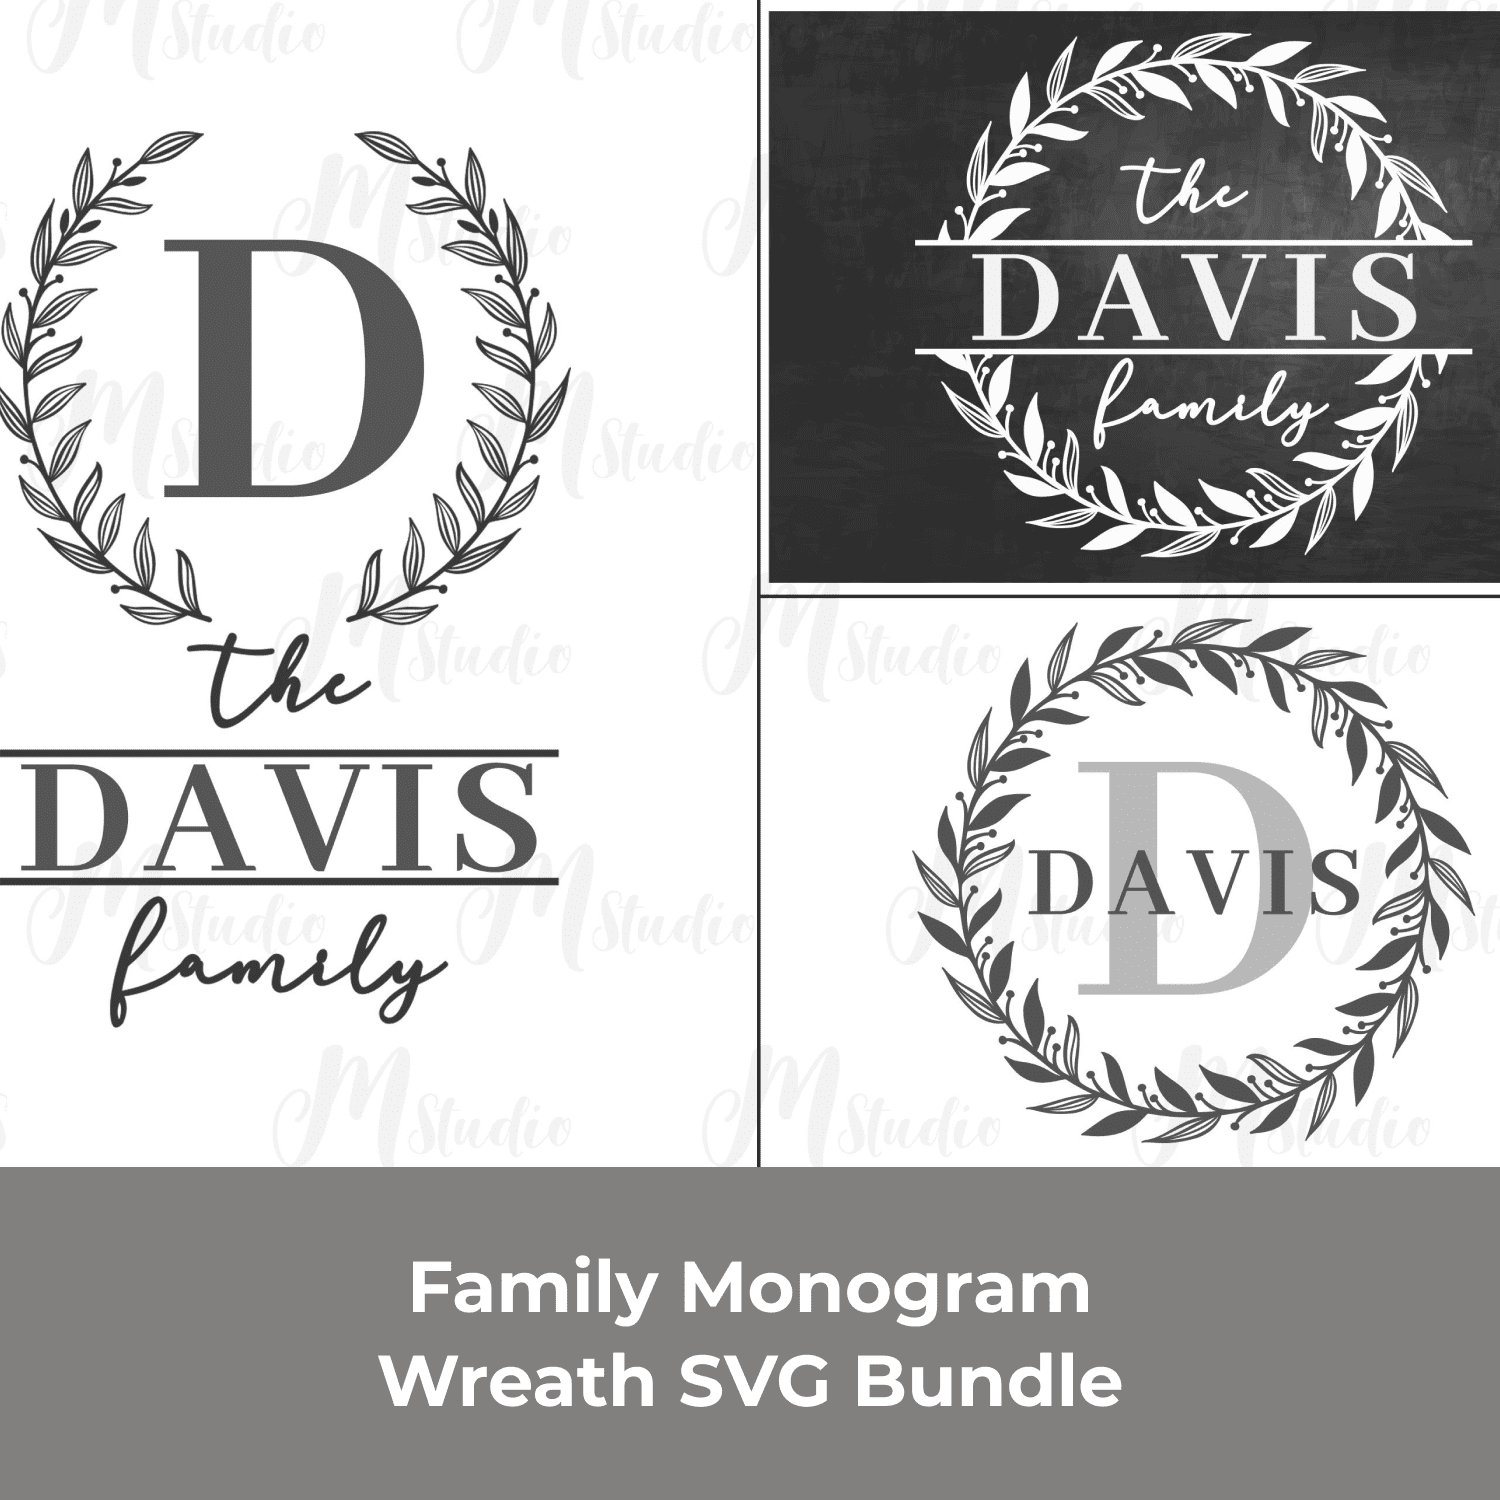 Family Monogram Wreath SVG Bundle cover.